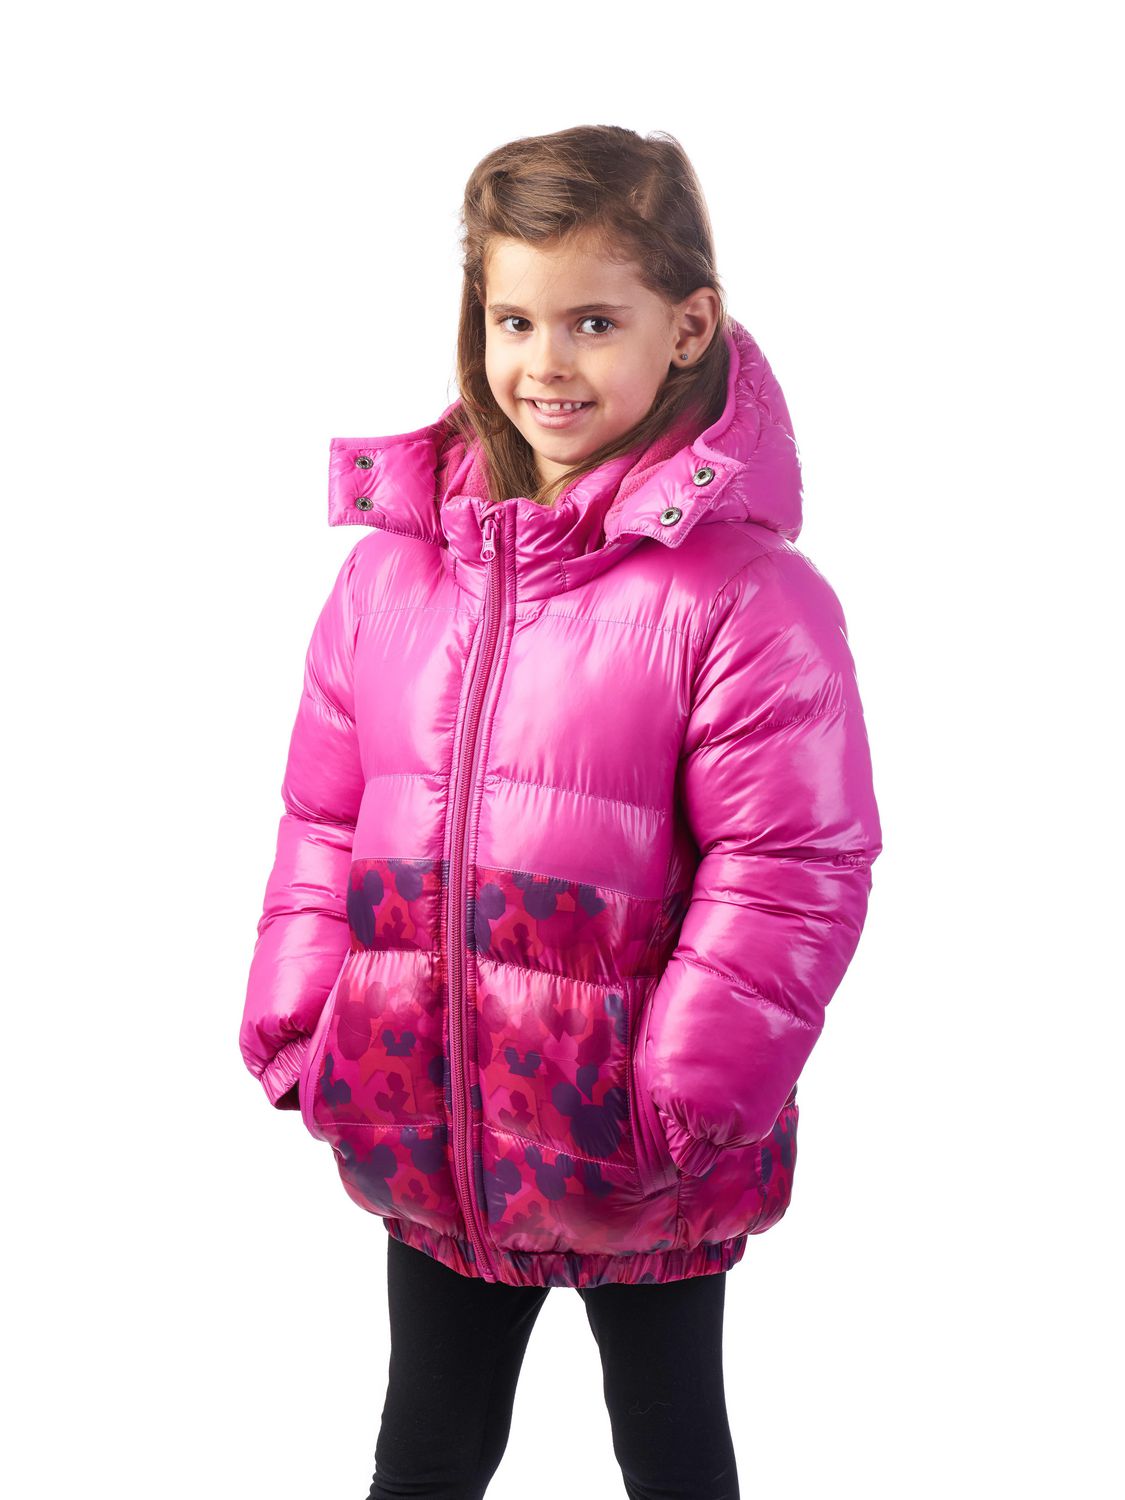 Disney world jacket by pinkbullets